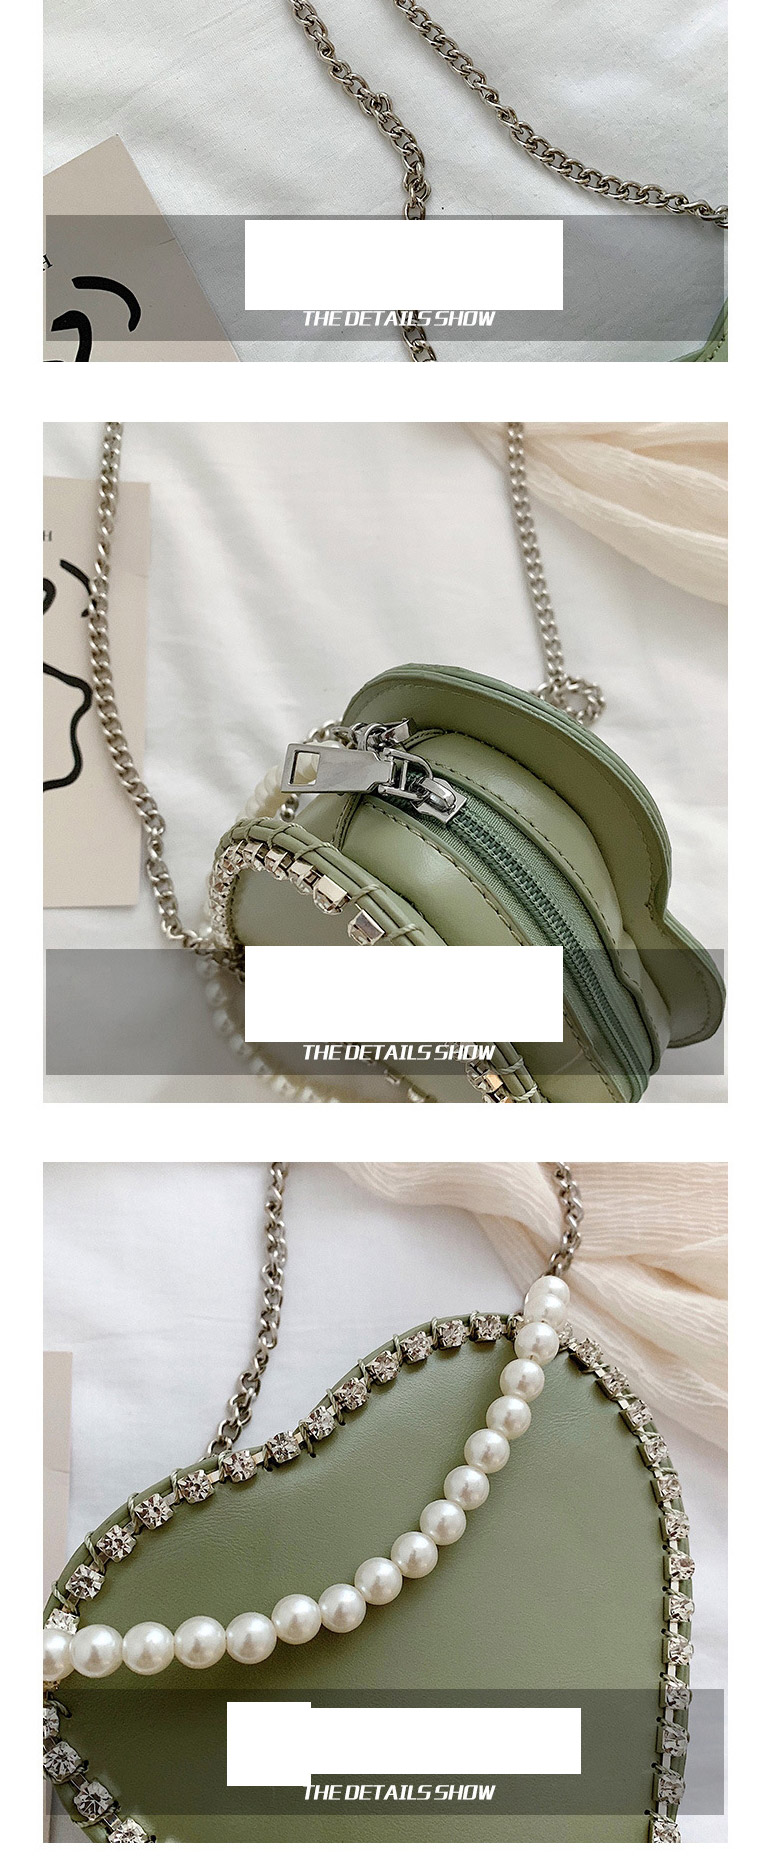 Fashion Pink Trumpet Heart-chain Single Shoulder Messenger Bag,Handbags